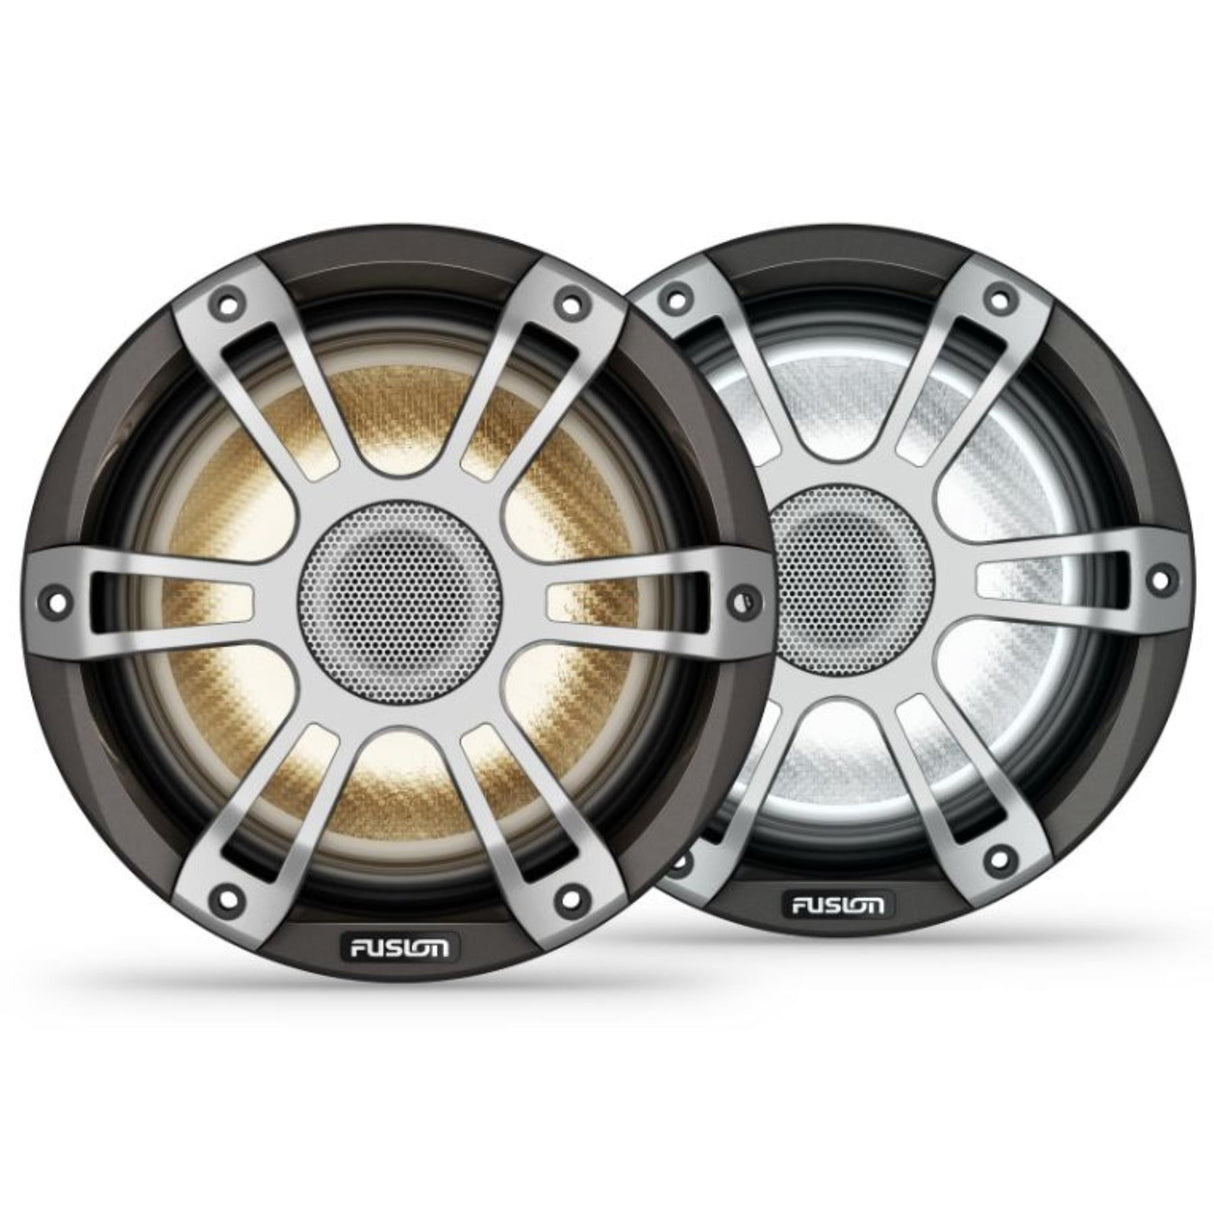 Fusion SG-FL773SPG 7.7" 3i CRGBW LED Speakers 280W - Sports Grey - PROTEUS MARINE STORE